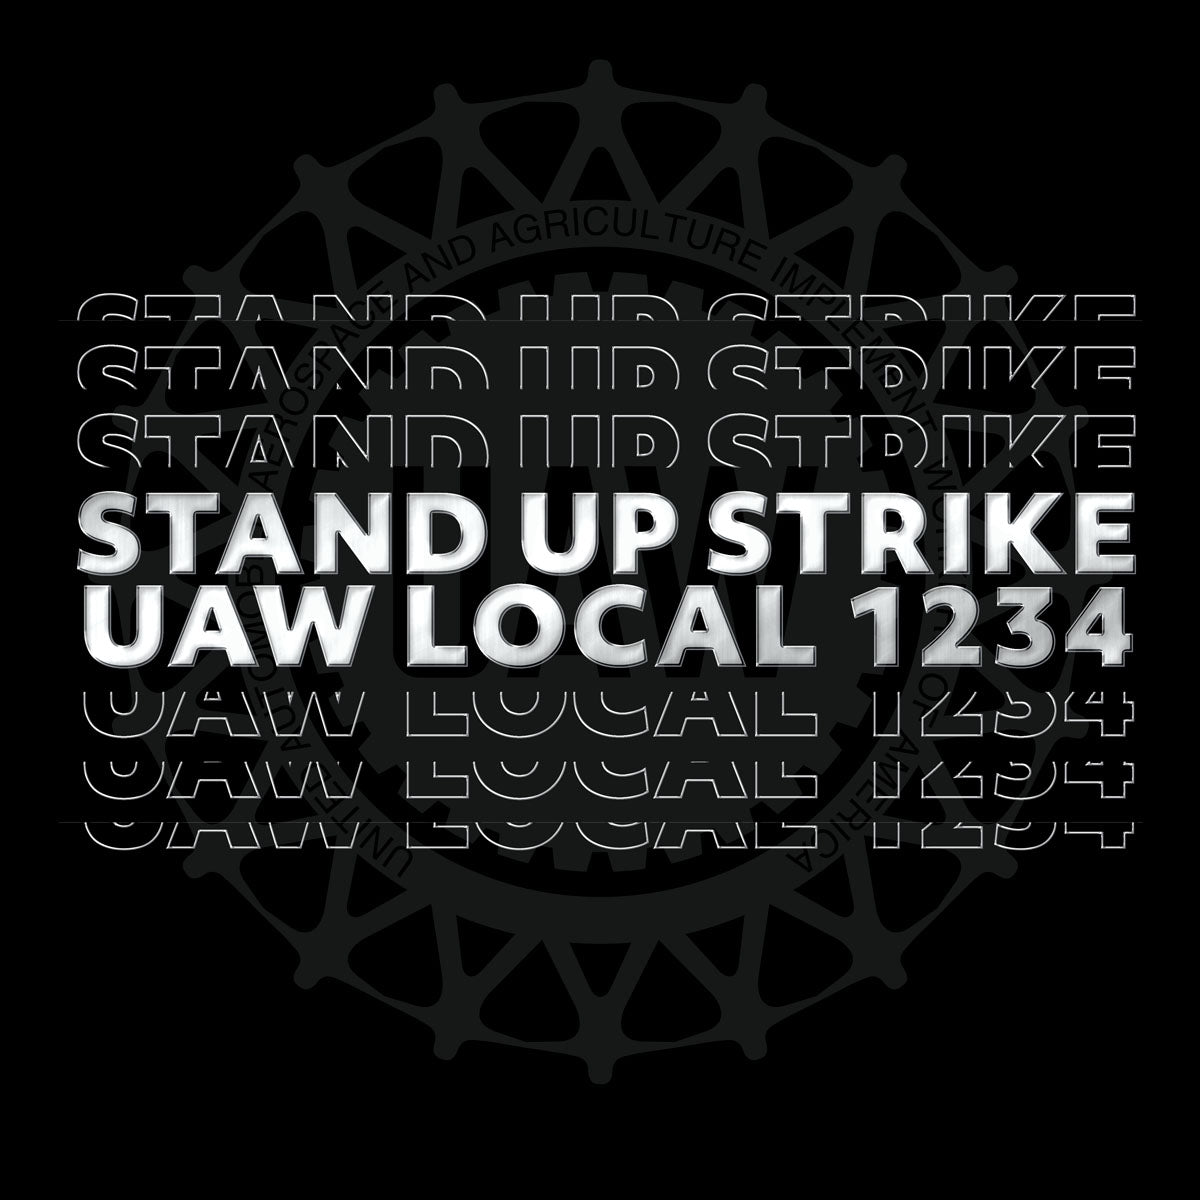 UAW Stand Up Strike Apparel